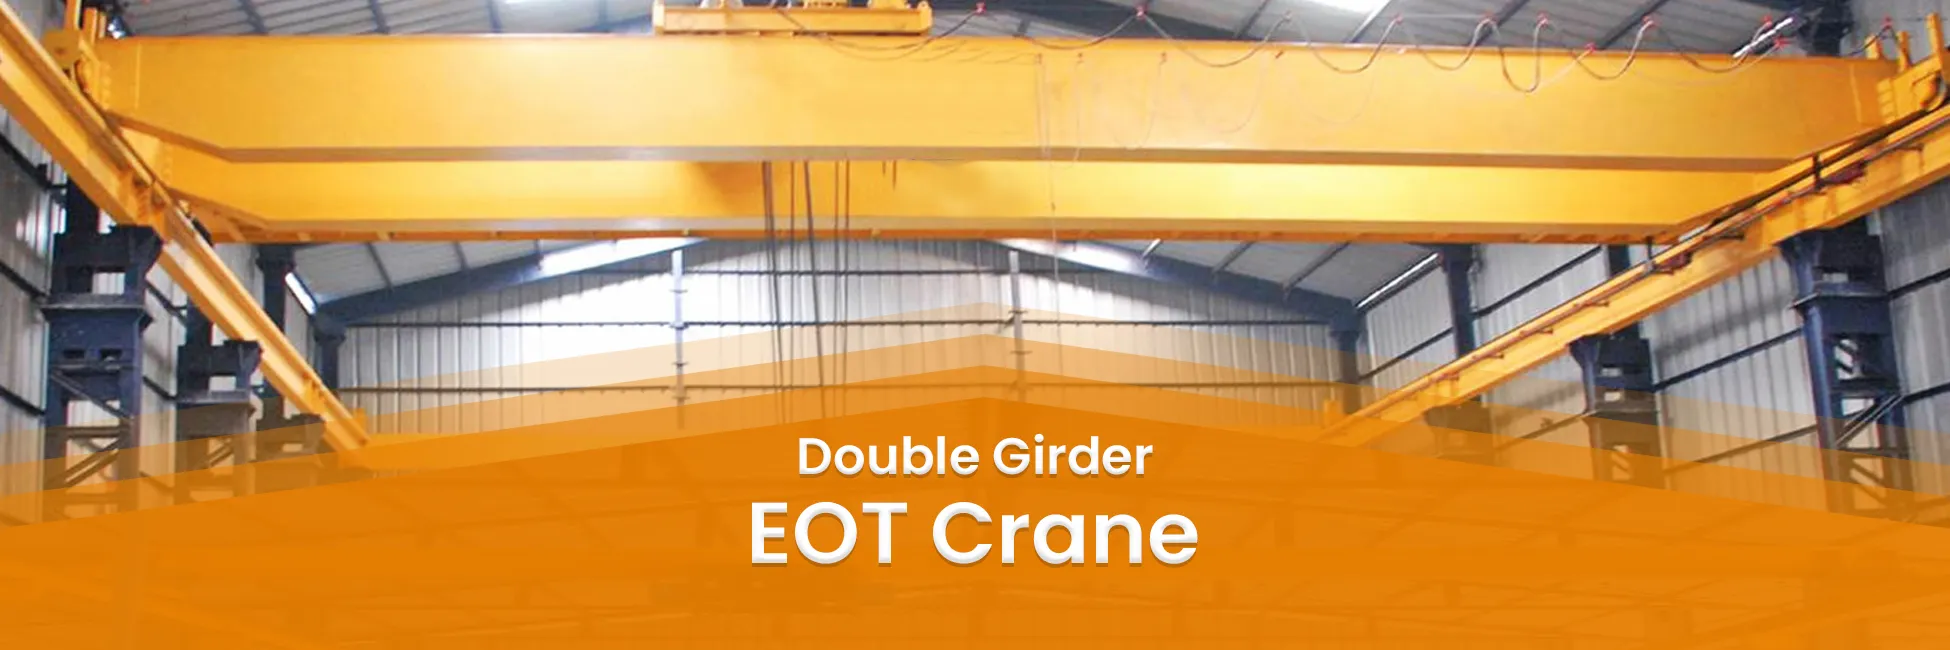 Double Girder Crane Manufacturer